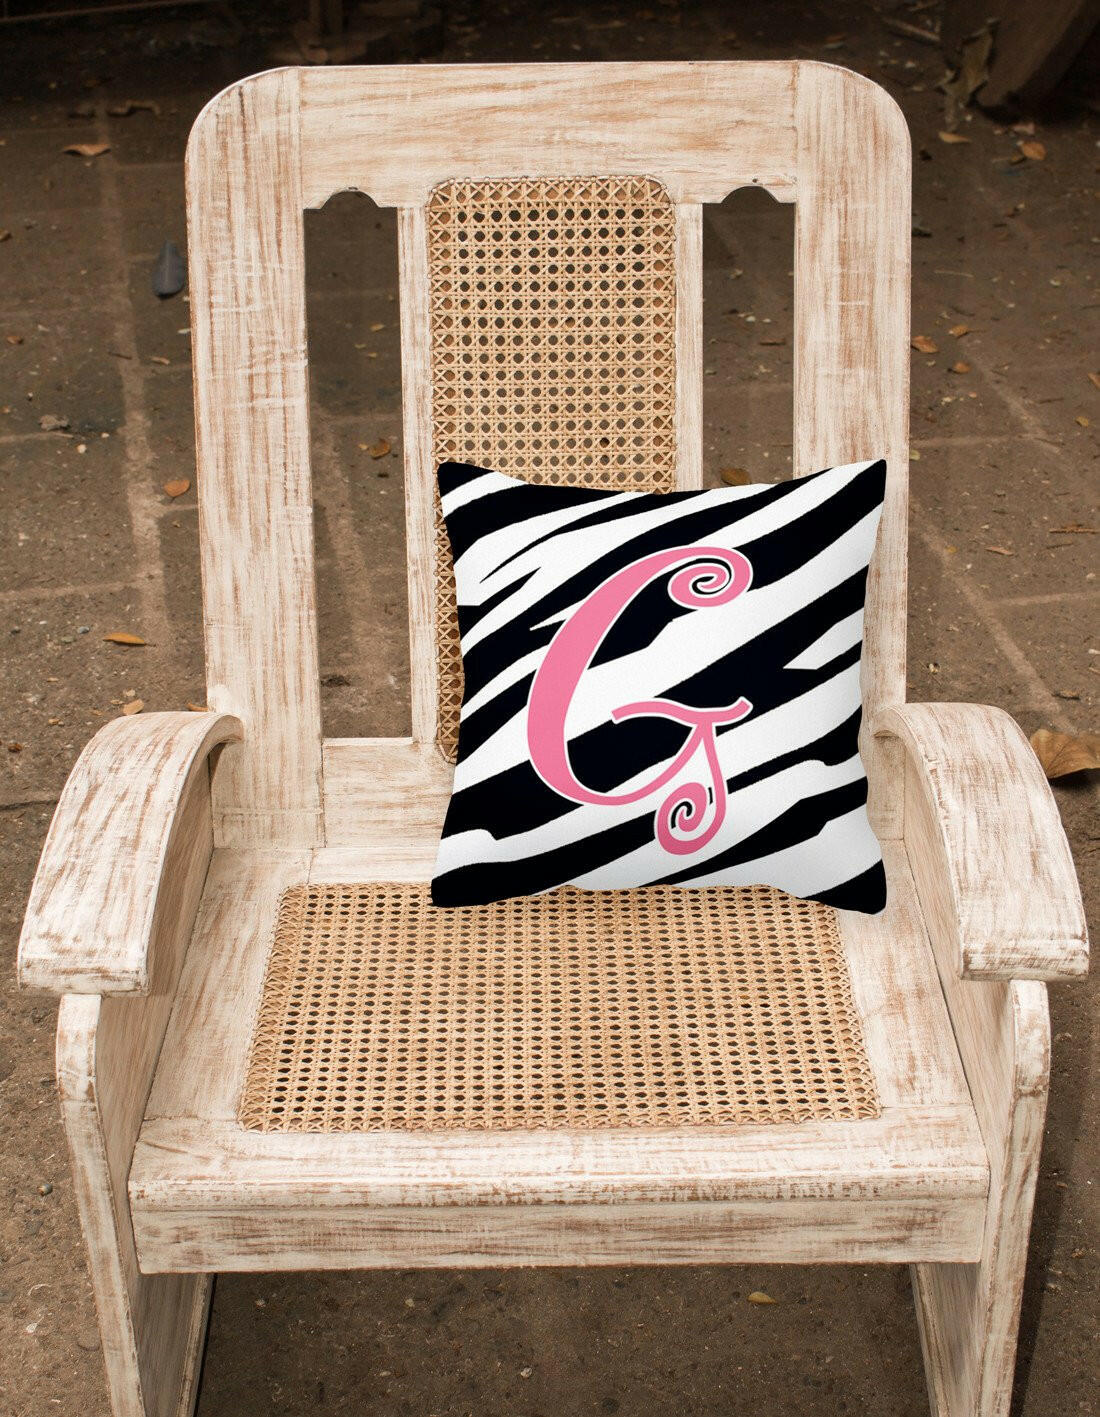 Monogram Initial G Zebra Stripe and Pink Decorative Canvas Fabric Pillow CJ1037 - the-store.com